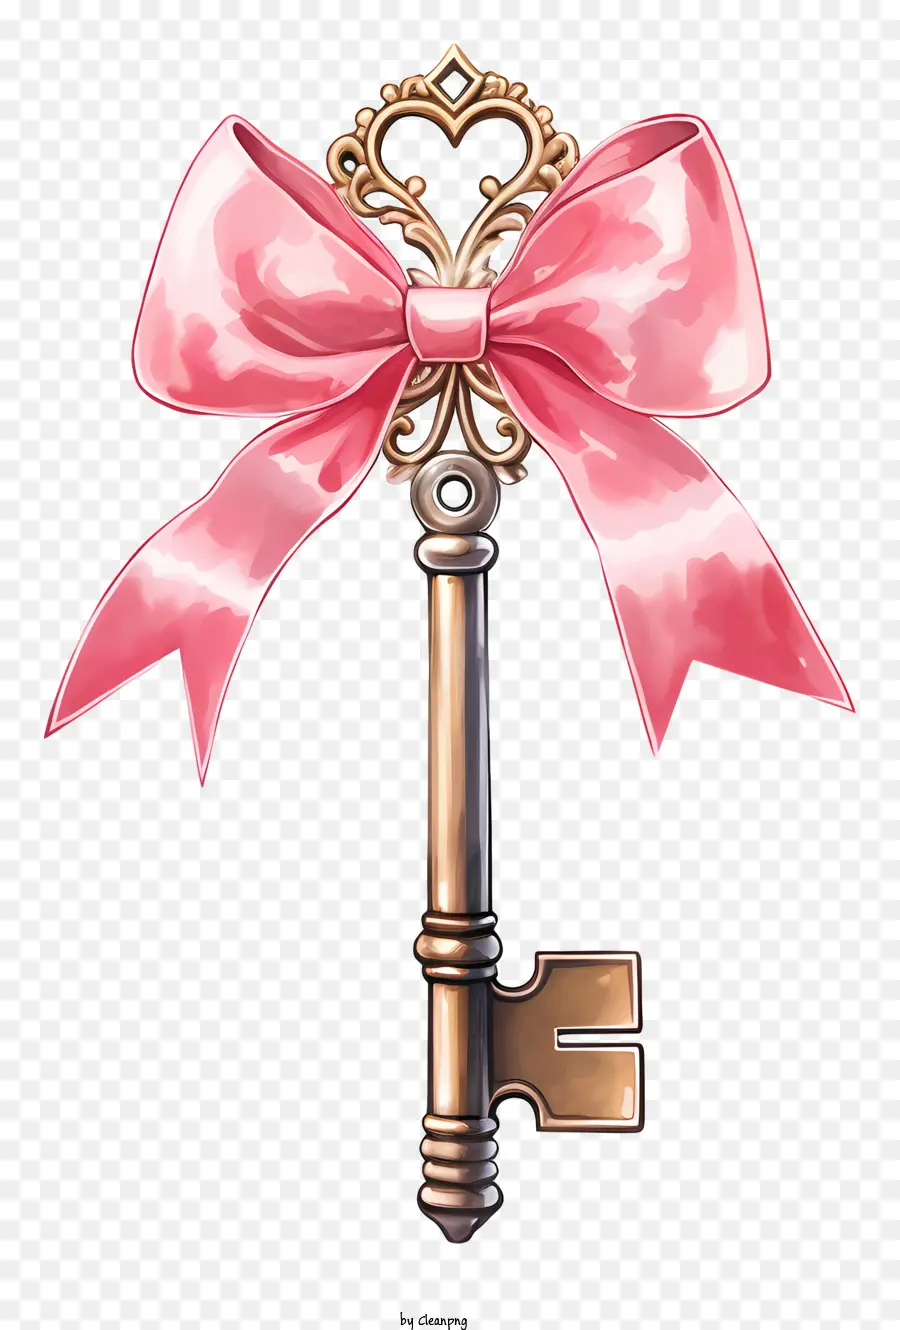 key large key ornate key pink bow key metal key